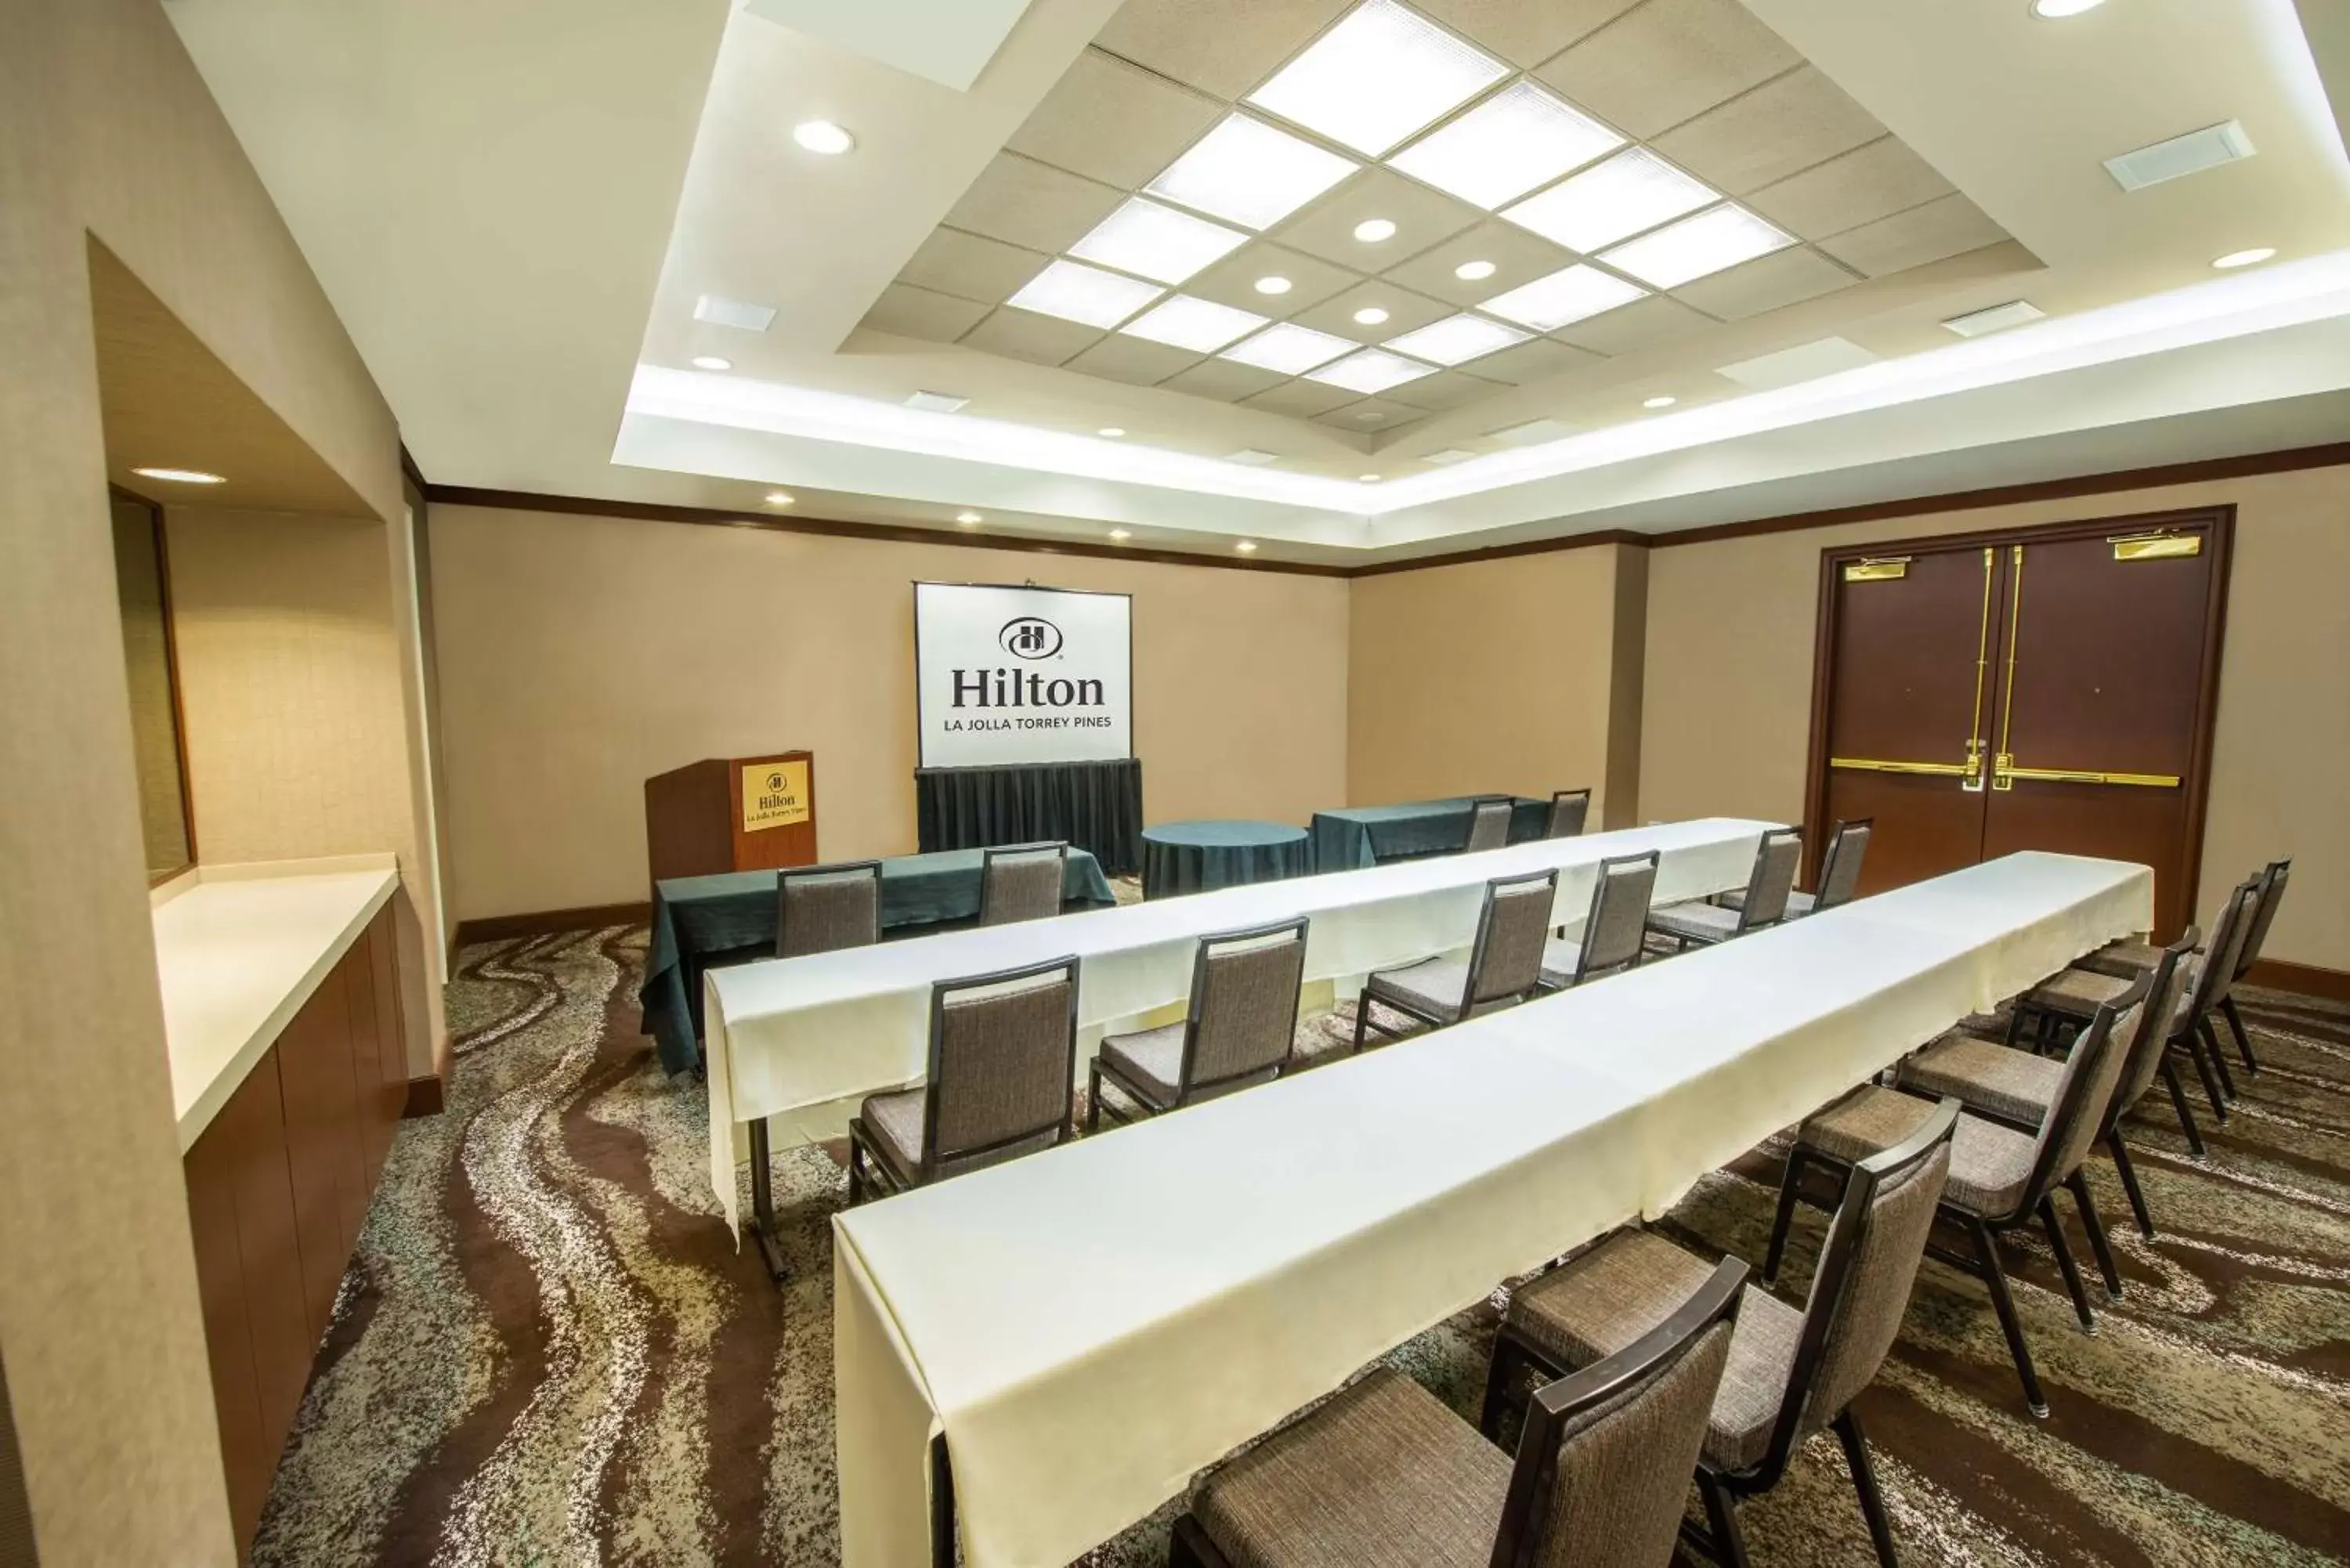 Meeting/conference room in Hilton La Jolla Torrey Pines